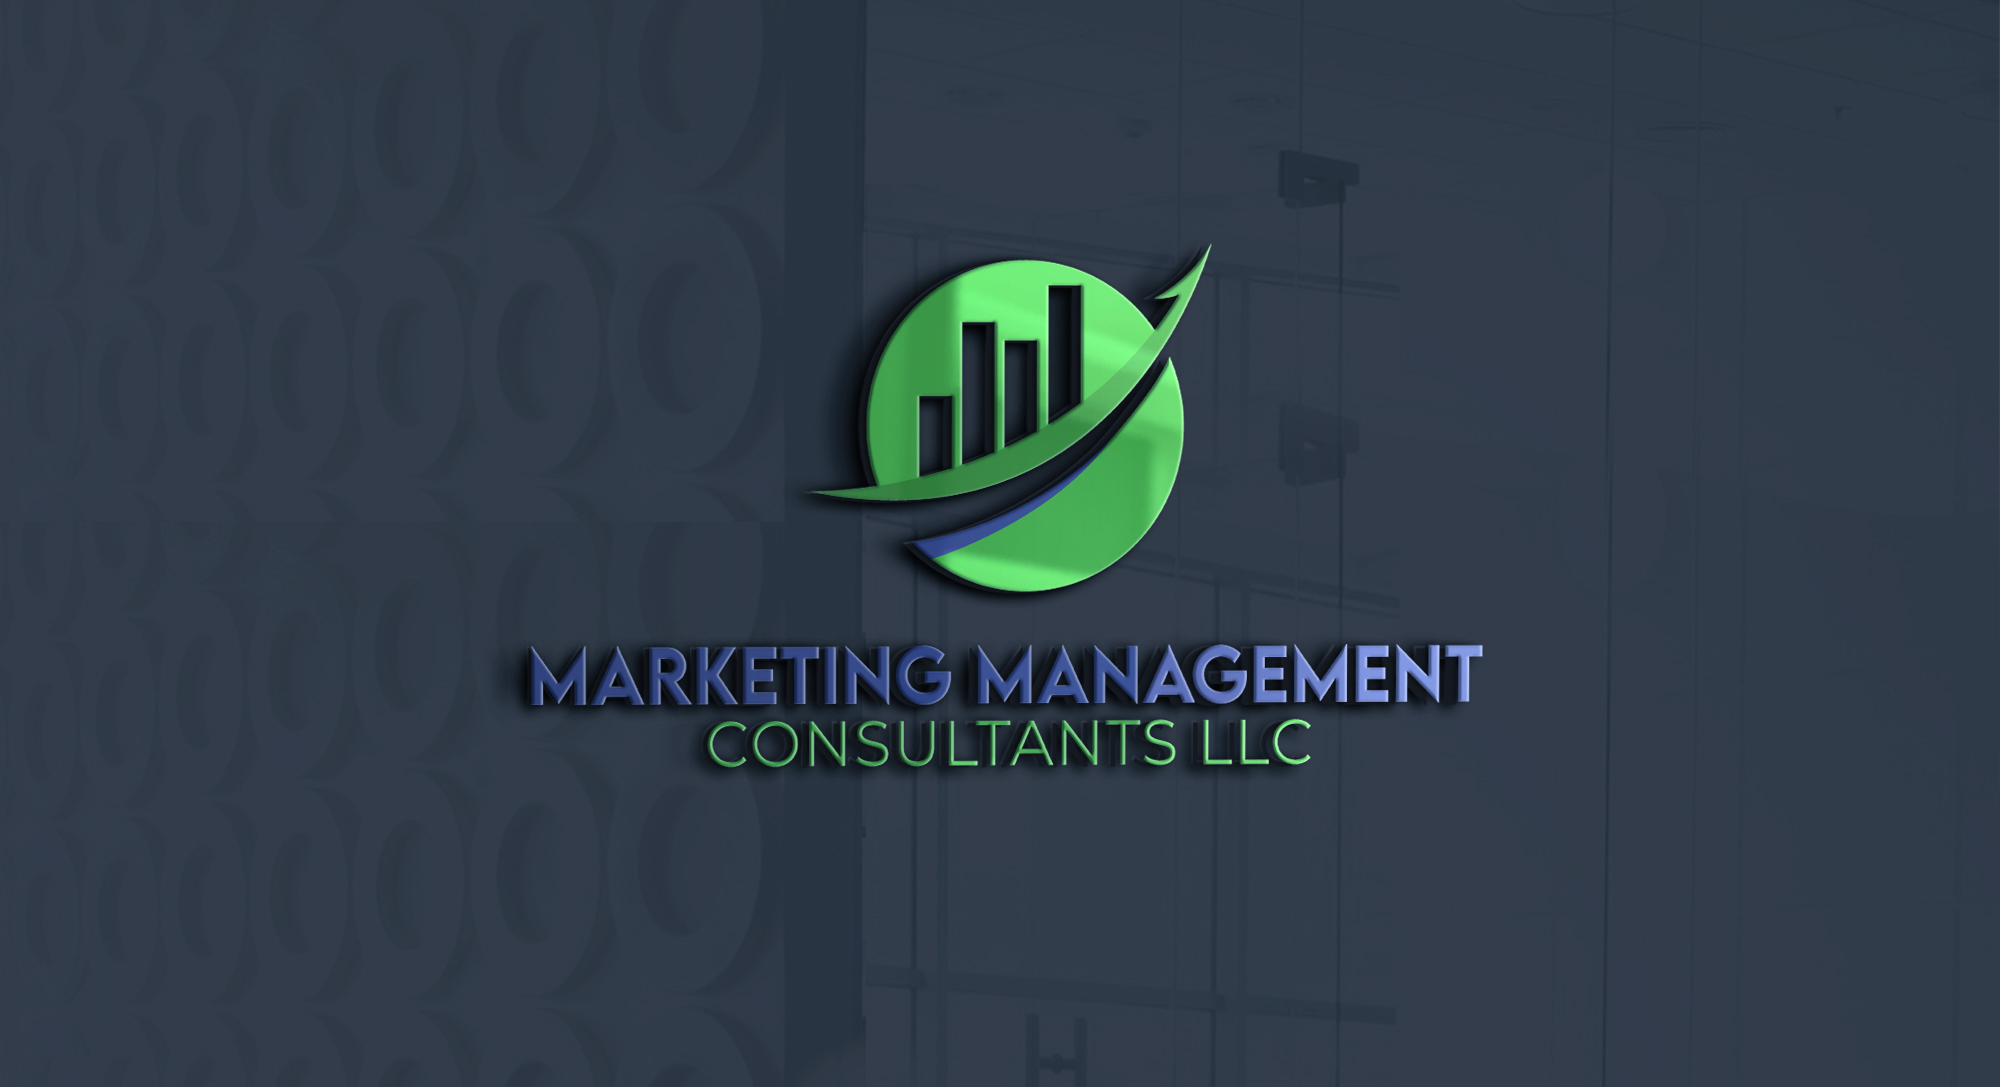 Marketing management consultants llc